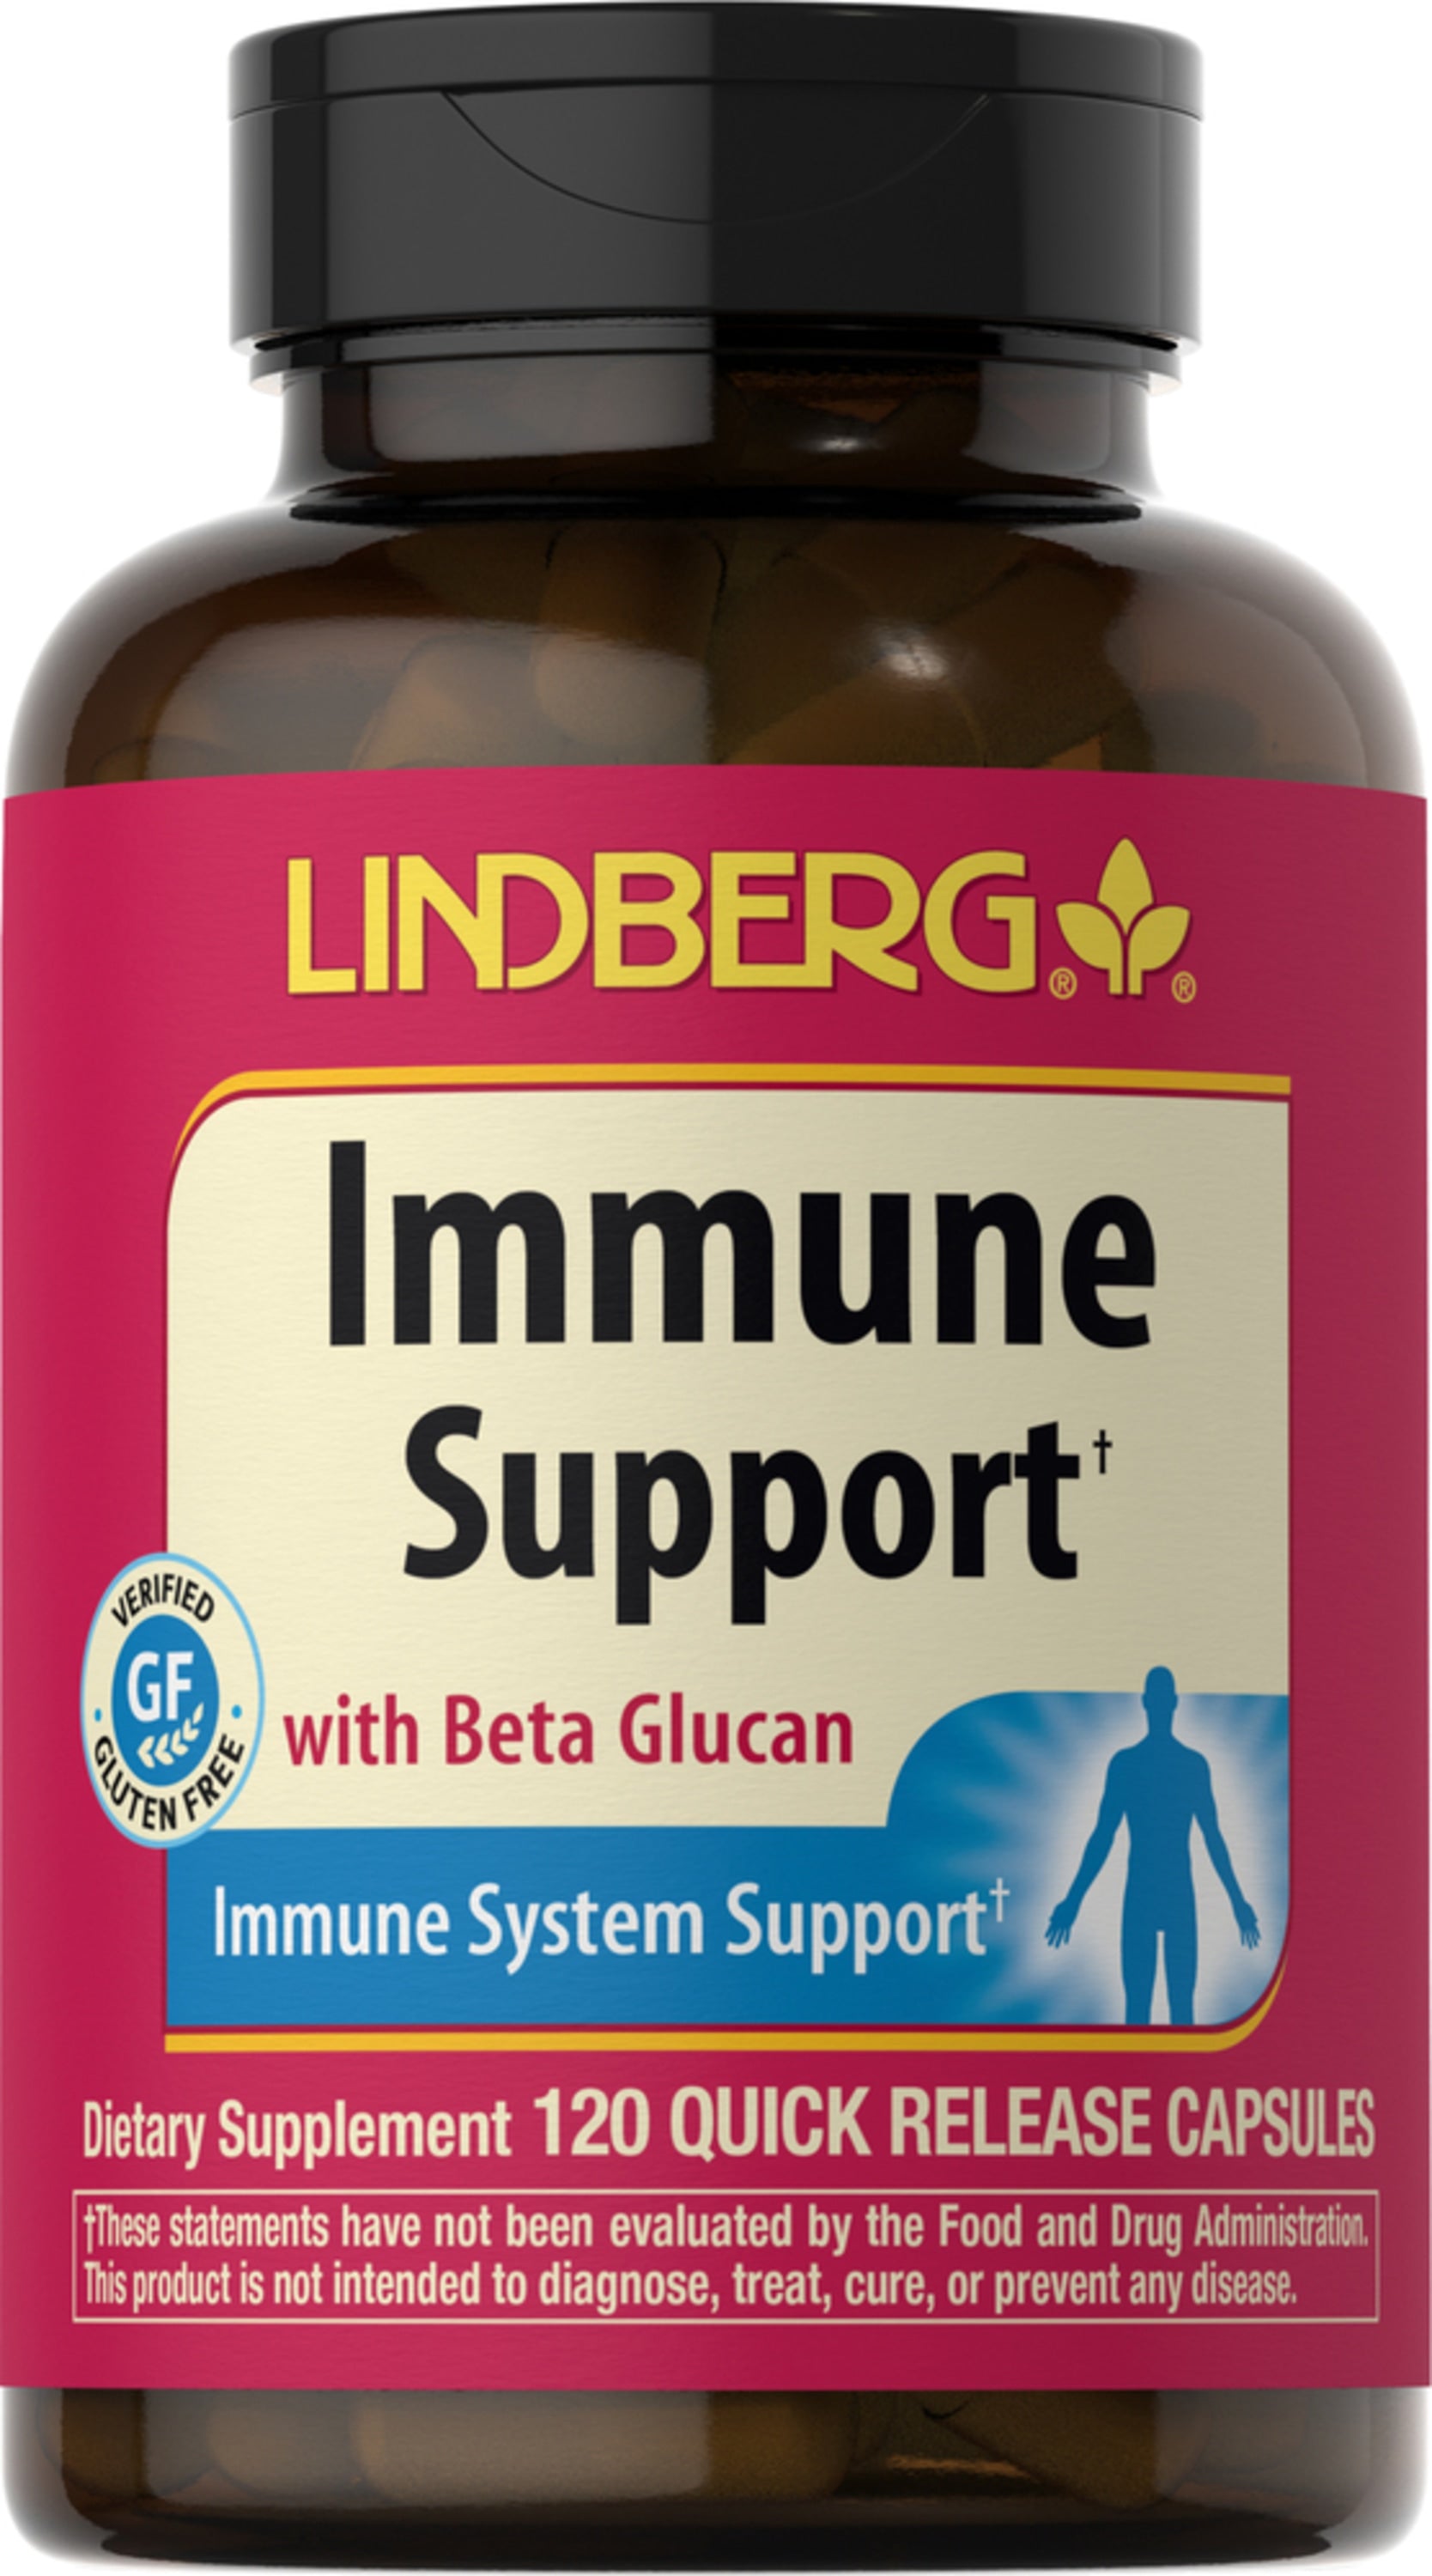 Immune Support with Beta Glucan, 120 Quick Release Capsules